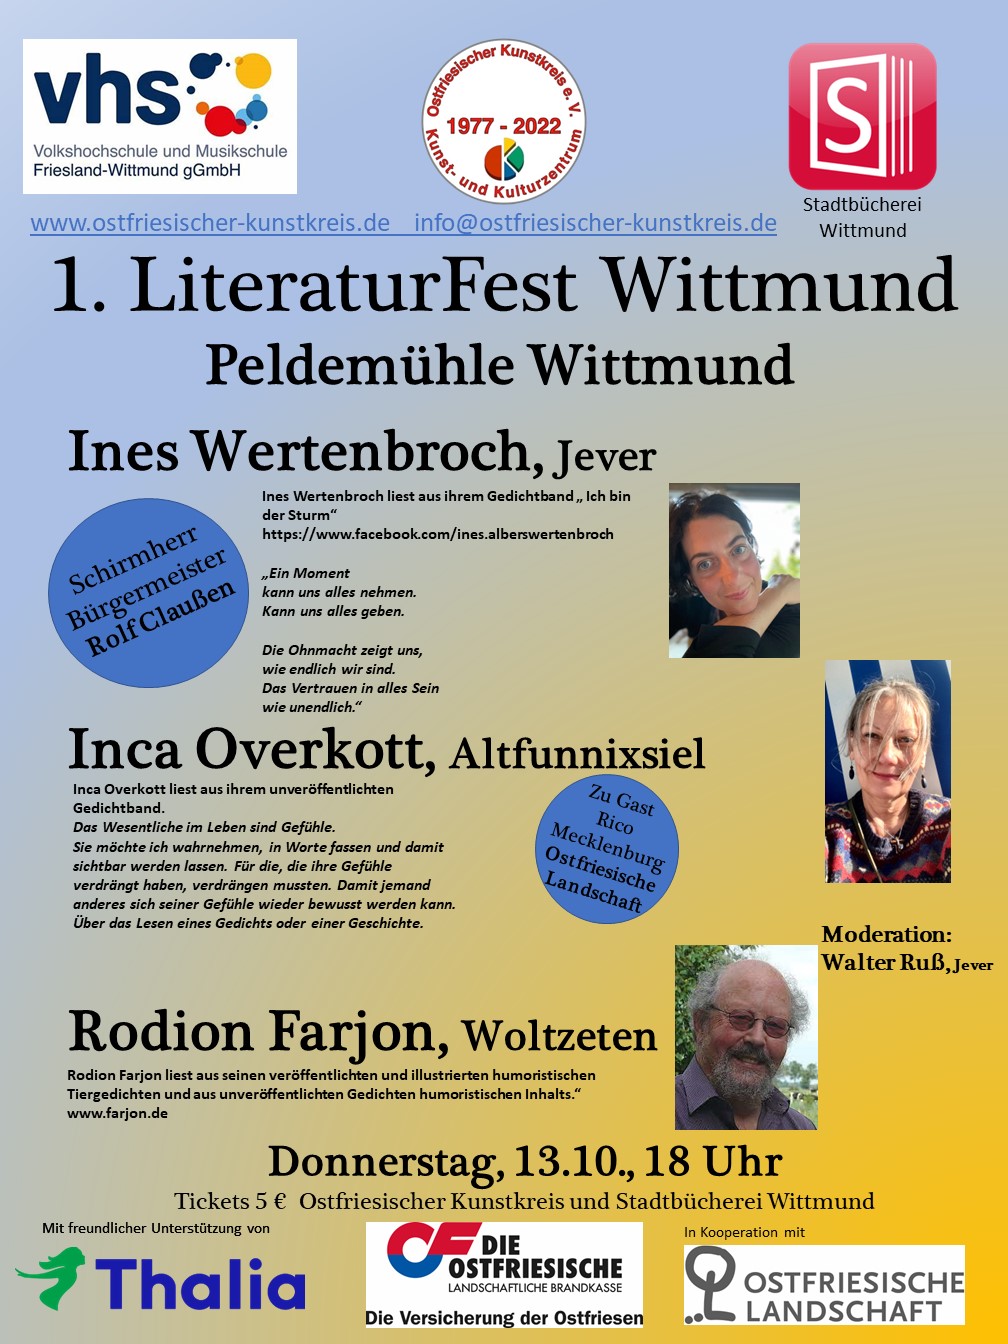 LiteraturFest 2022 13.10.2022 Auftaktveranstaltung